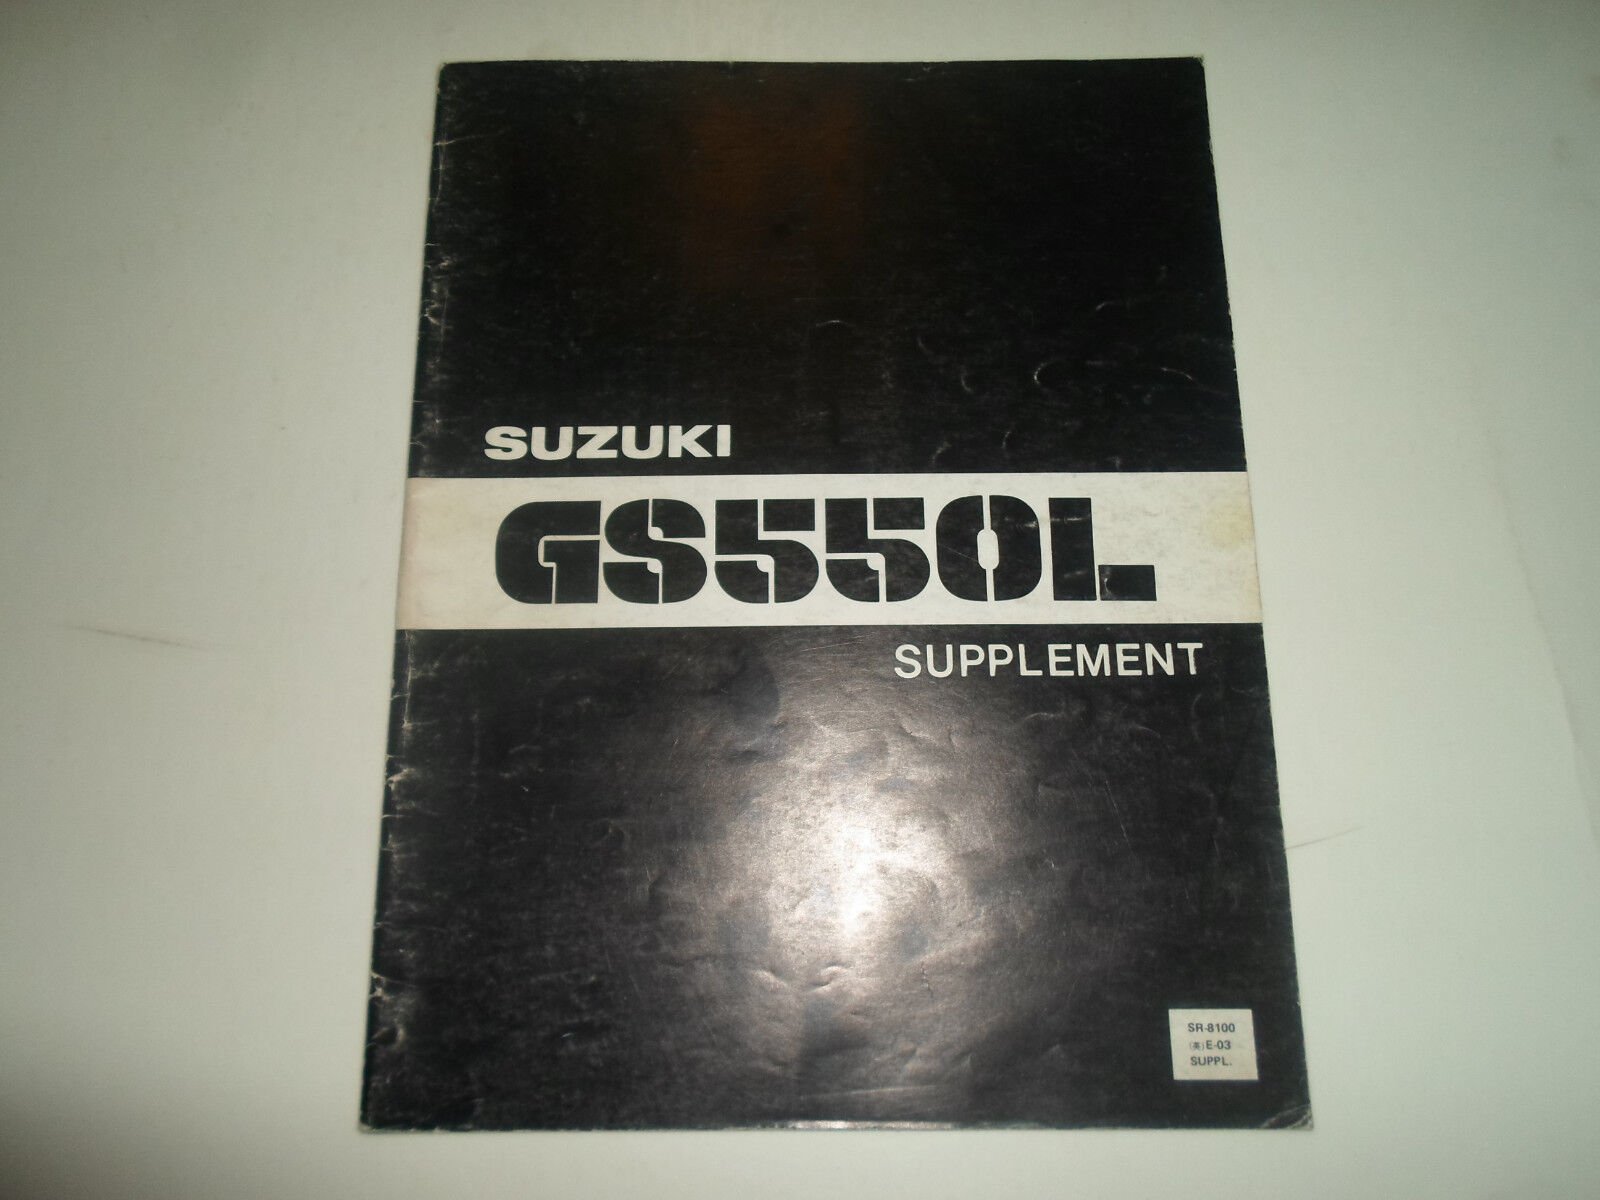 Primary image for 1980 Suzuki GS550L Supplement Shop Repair Workshop Manual FACTORY OEM BOOK 80 x